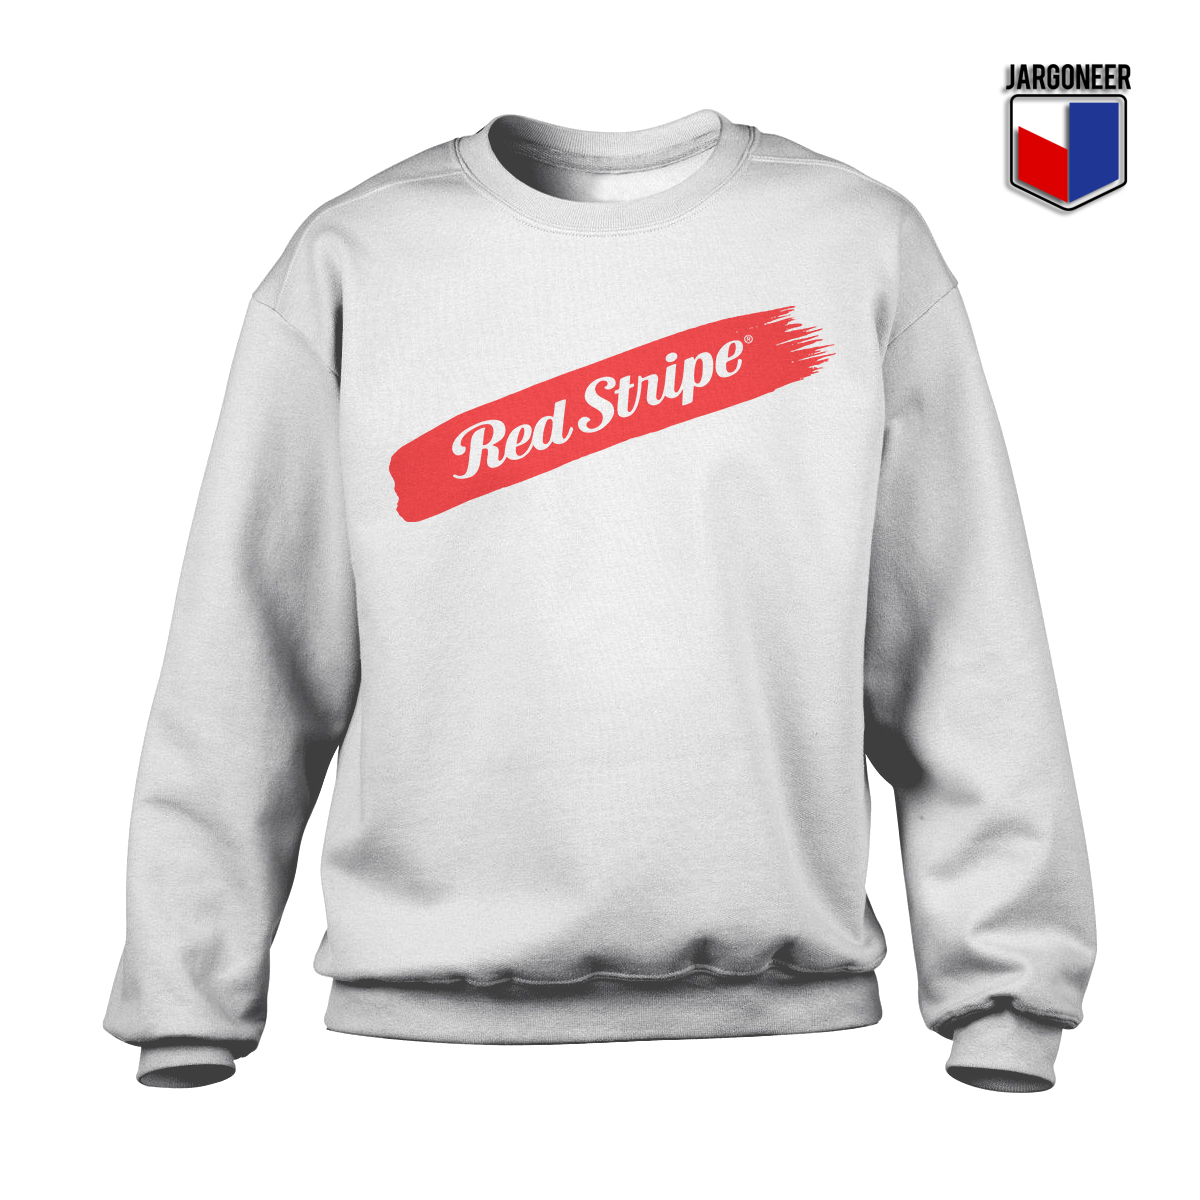 Red Stripe Swash White SS - Shop Unique Graphic Cool Shirt Designs